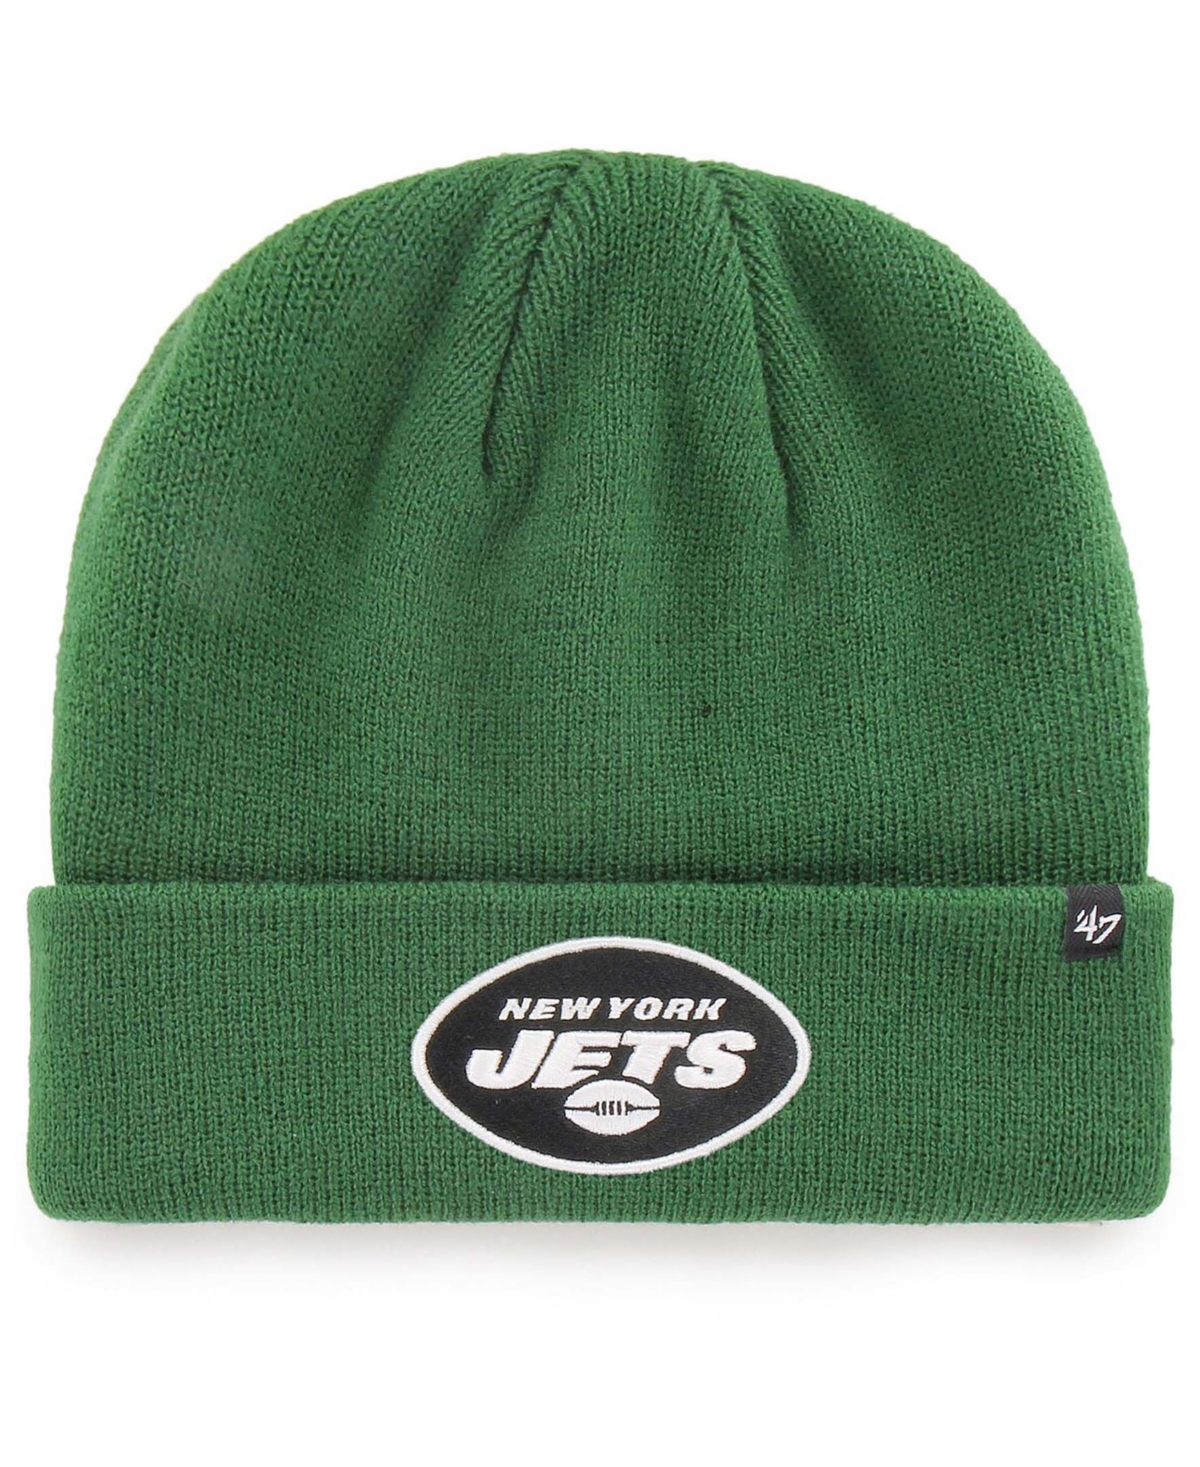 47 Brand Kids' Boys Green New York Jets Basic Cuffed Knit Hat